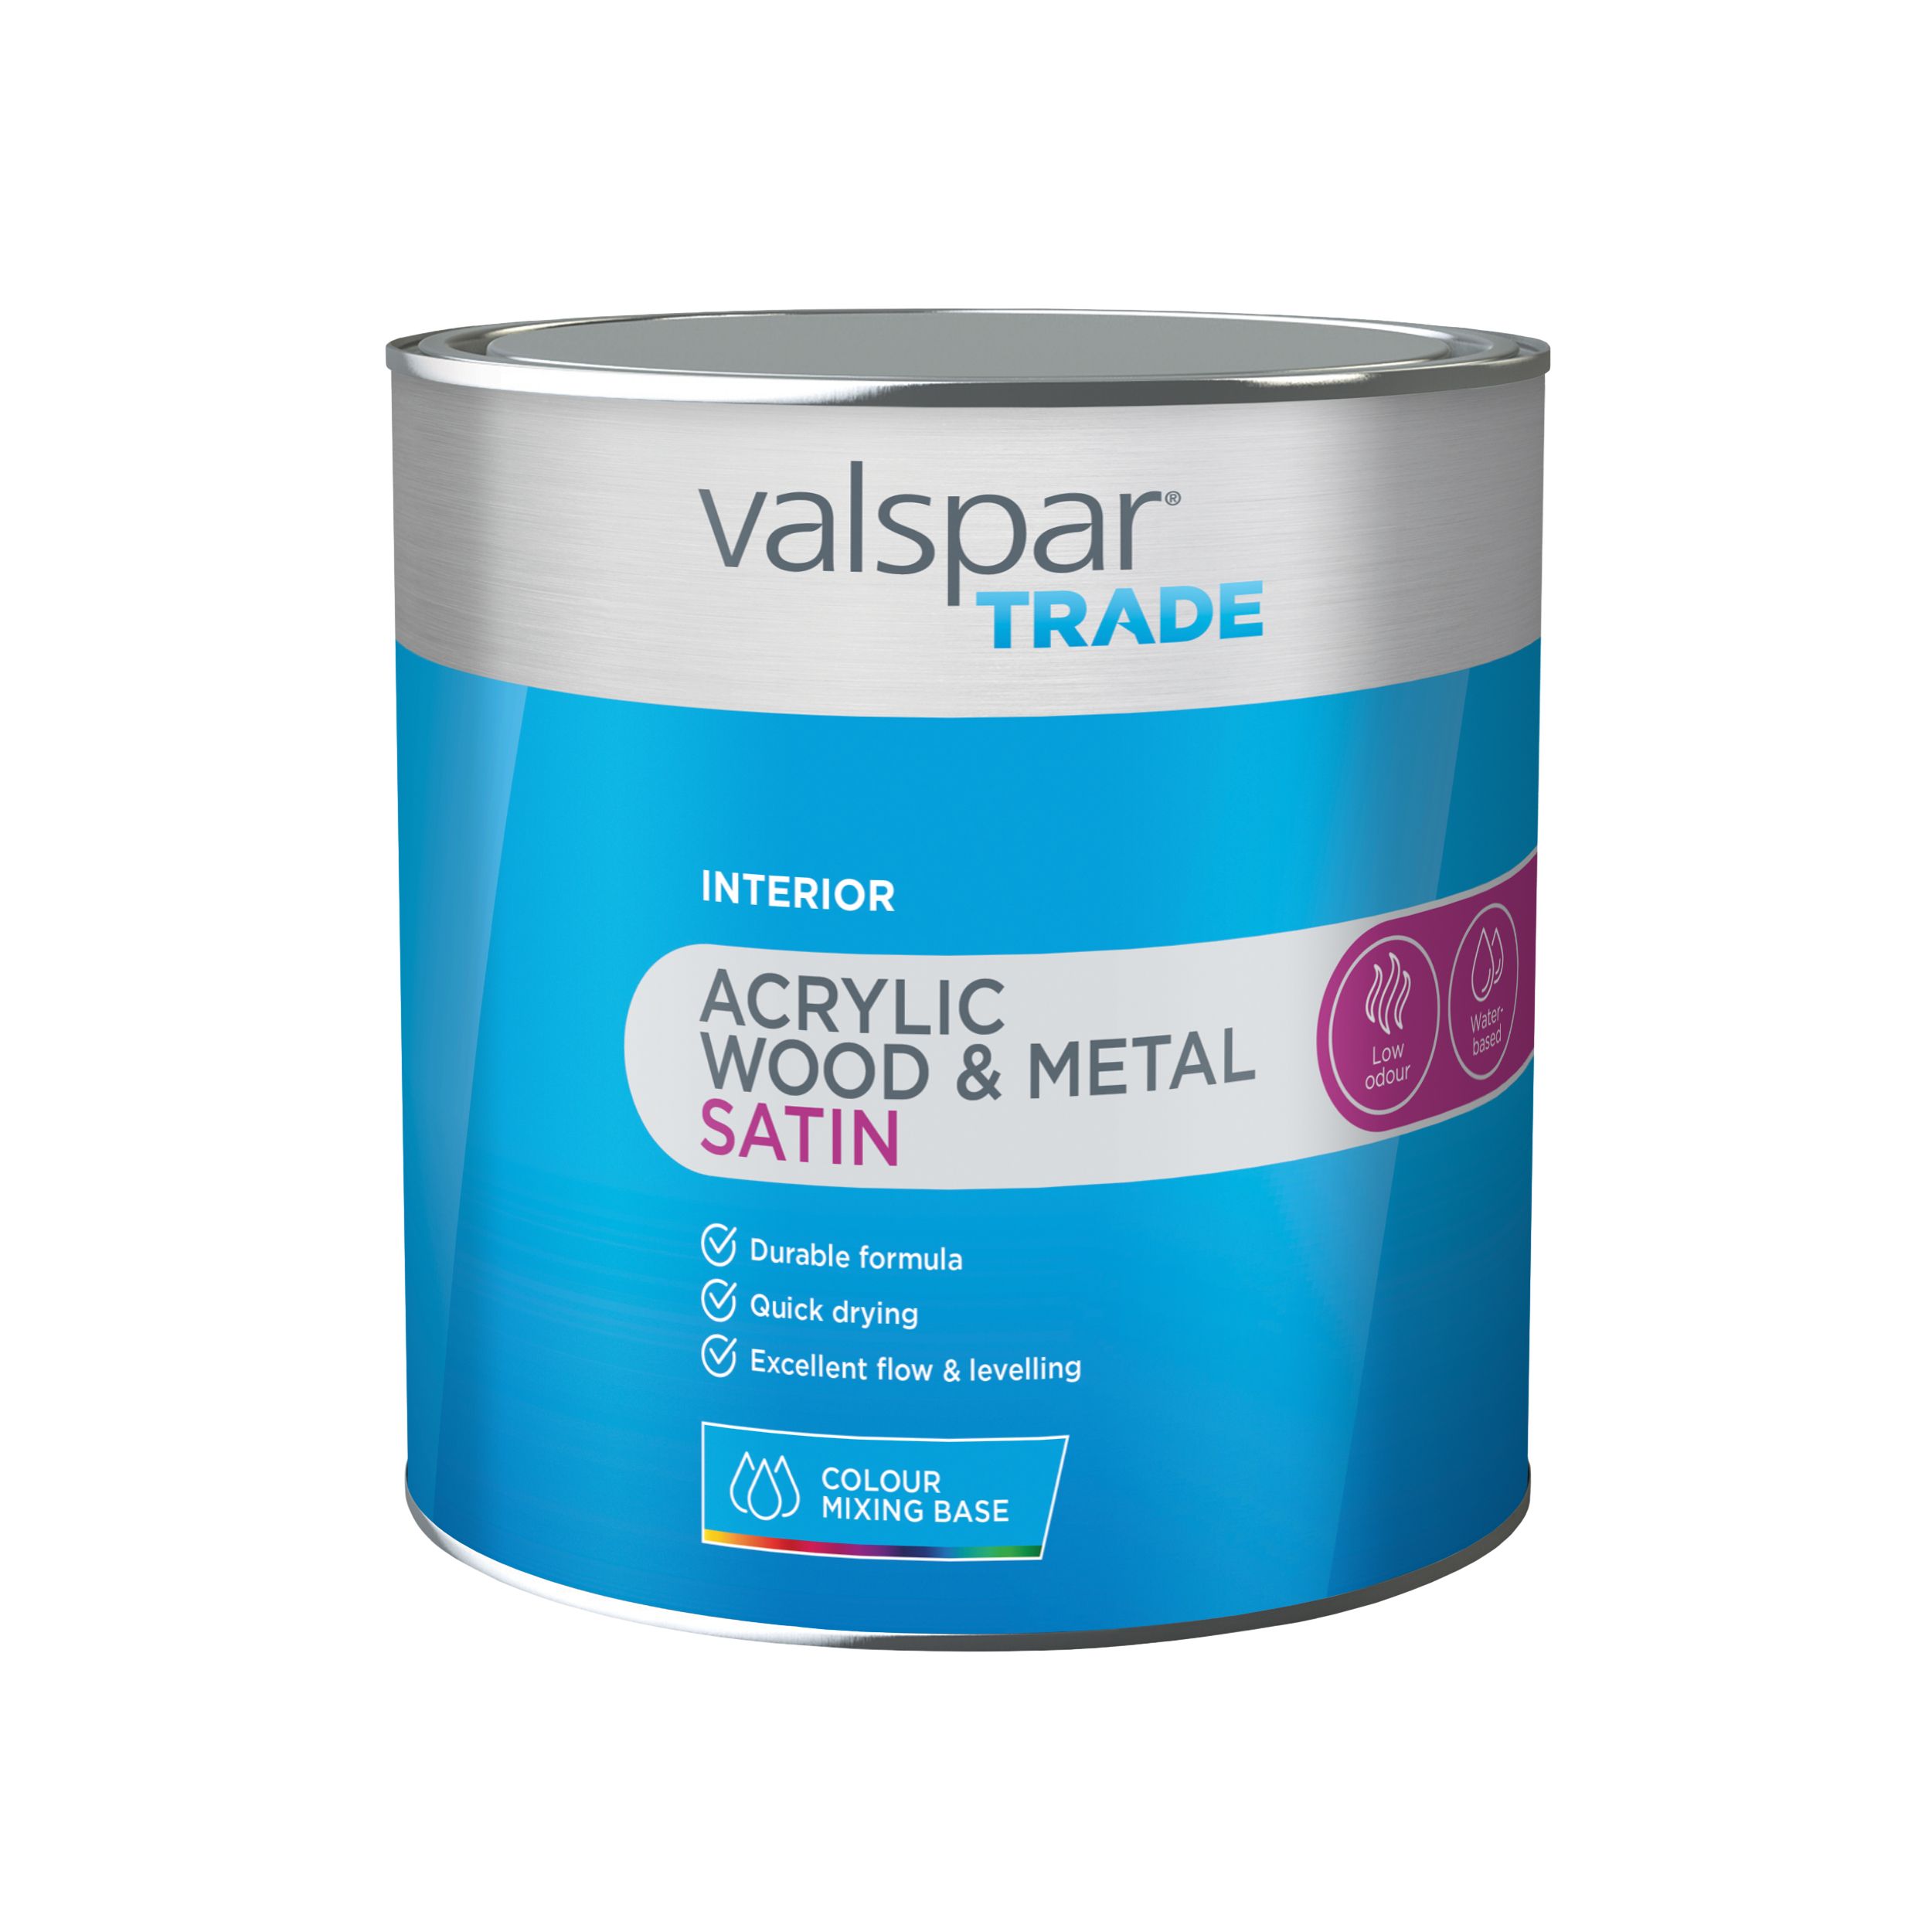 Valspar Trade Acrylic Wood & Metal Interior Multi-surface Satin Paint, Base A, Base A, 2.5L